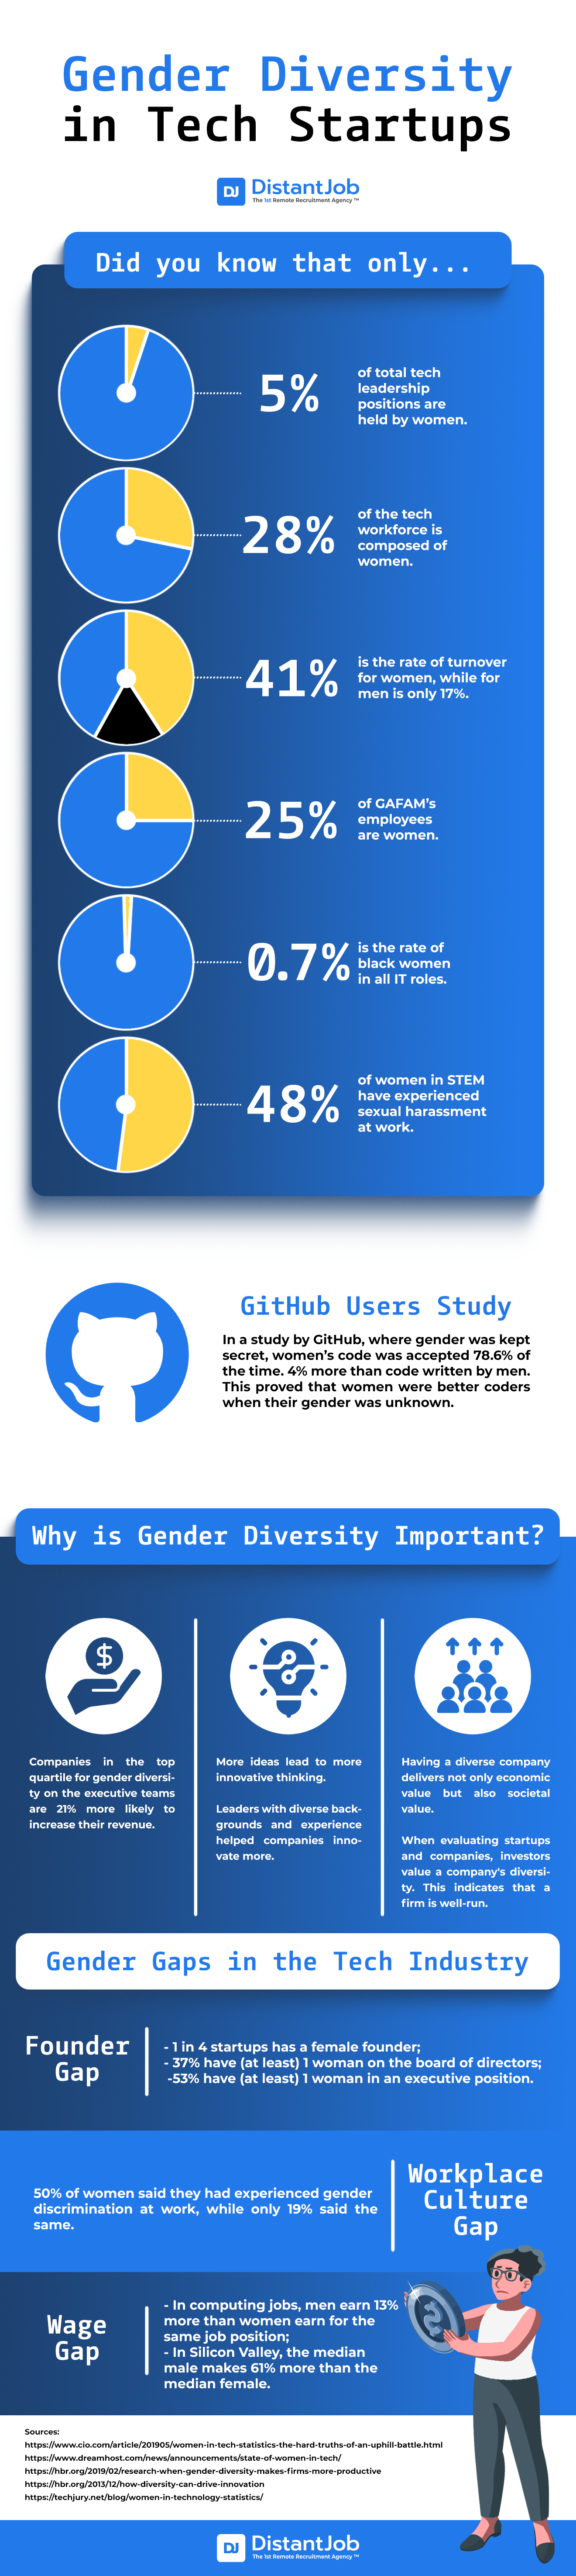 Gender diversity in tech startups